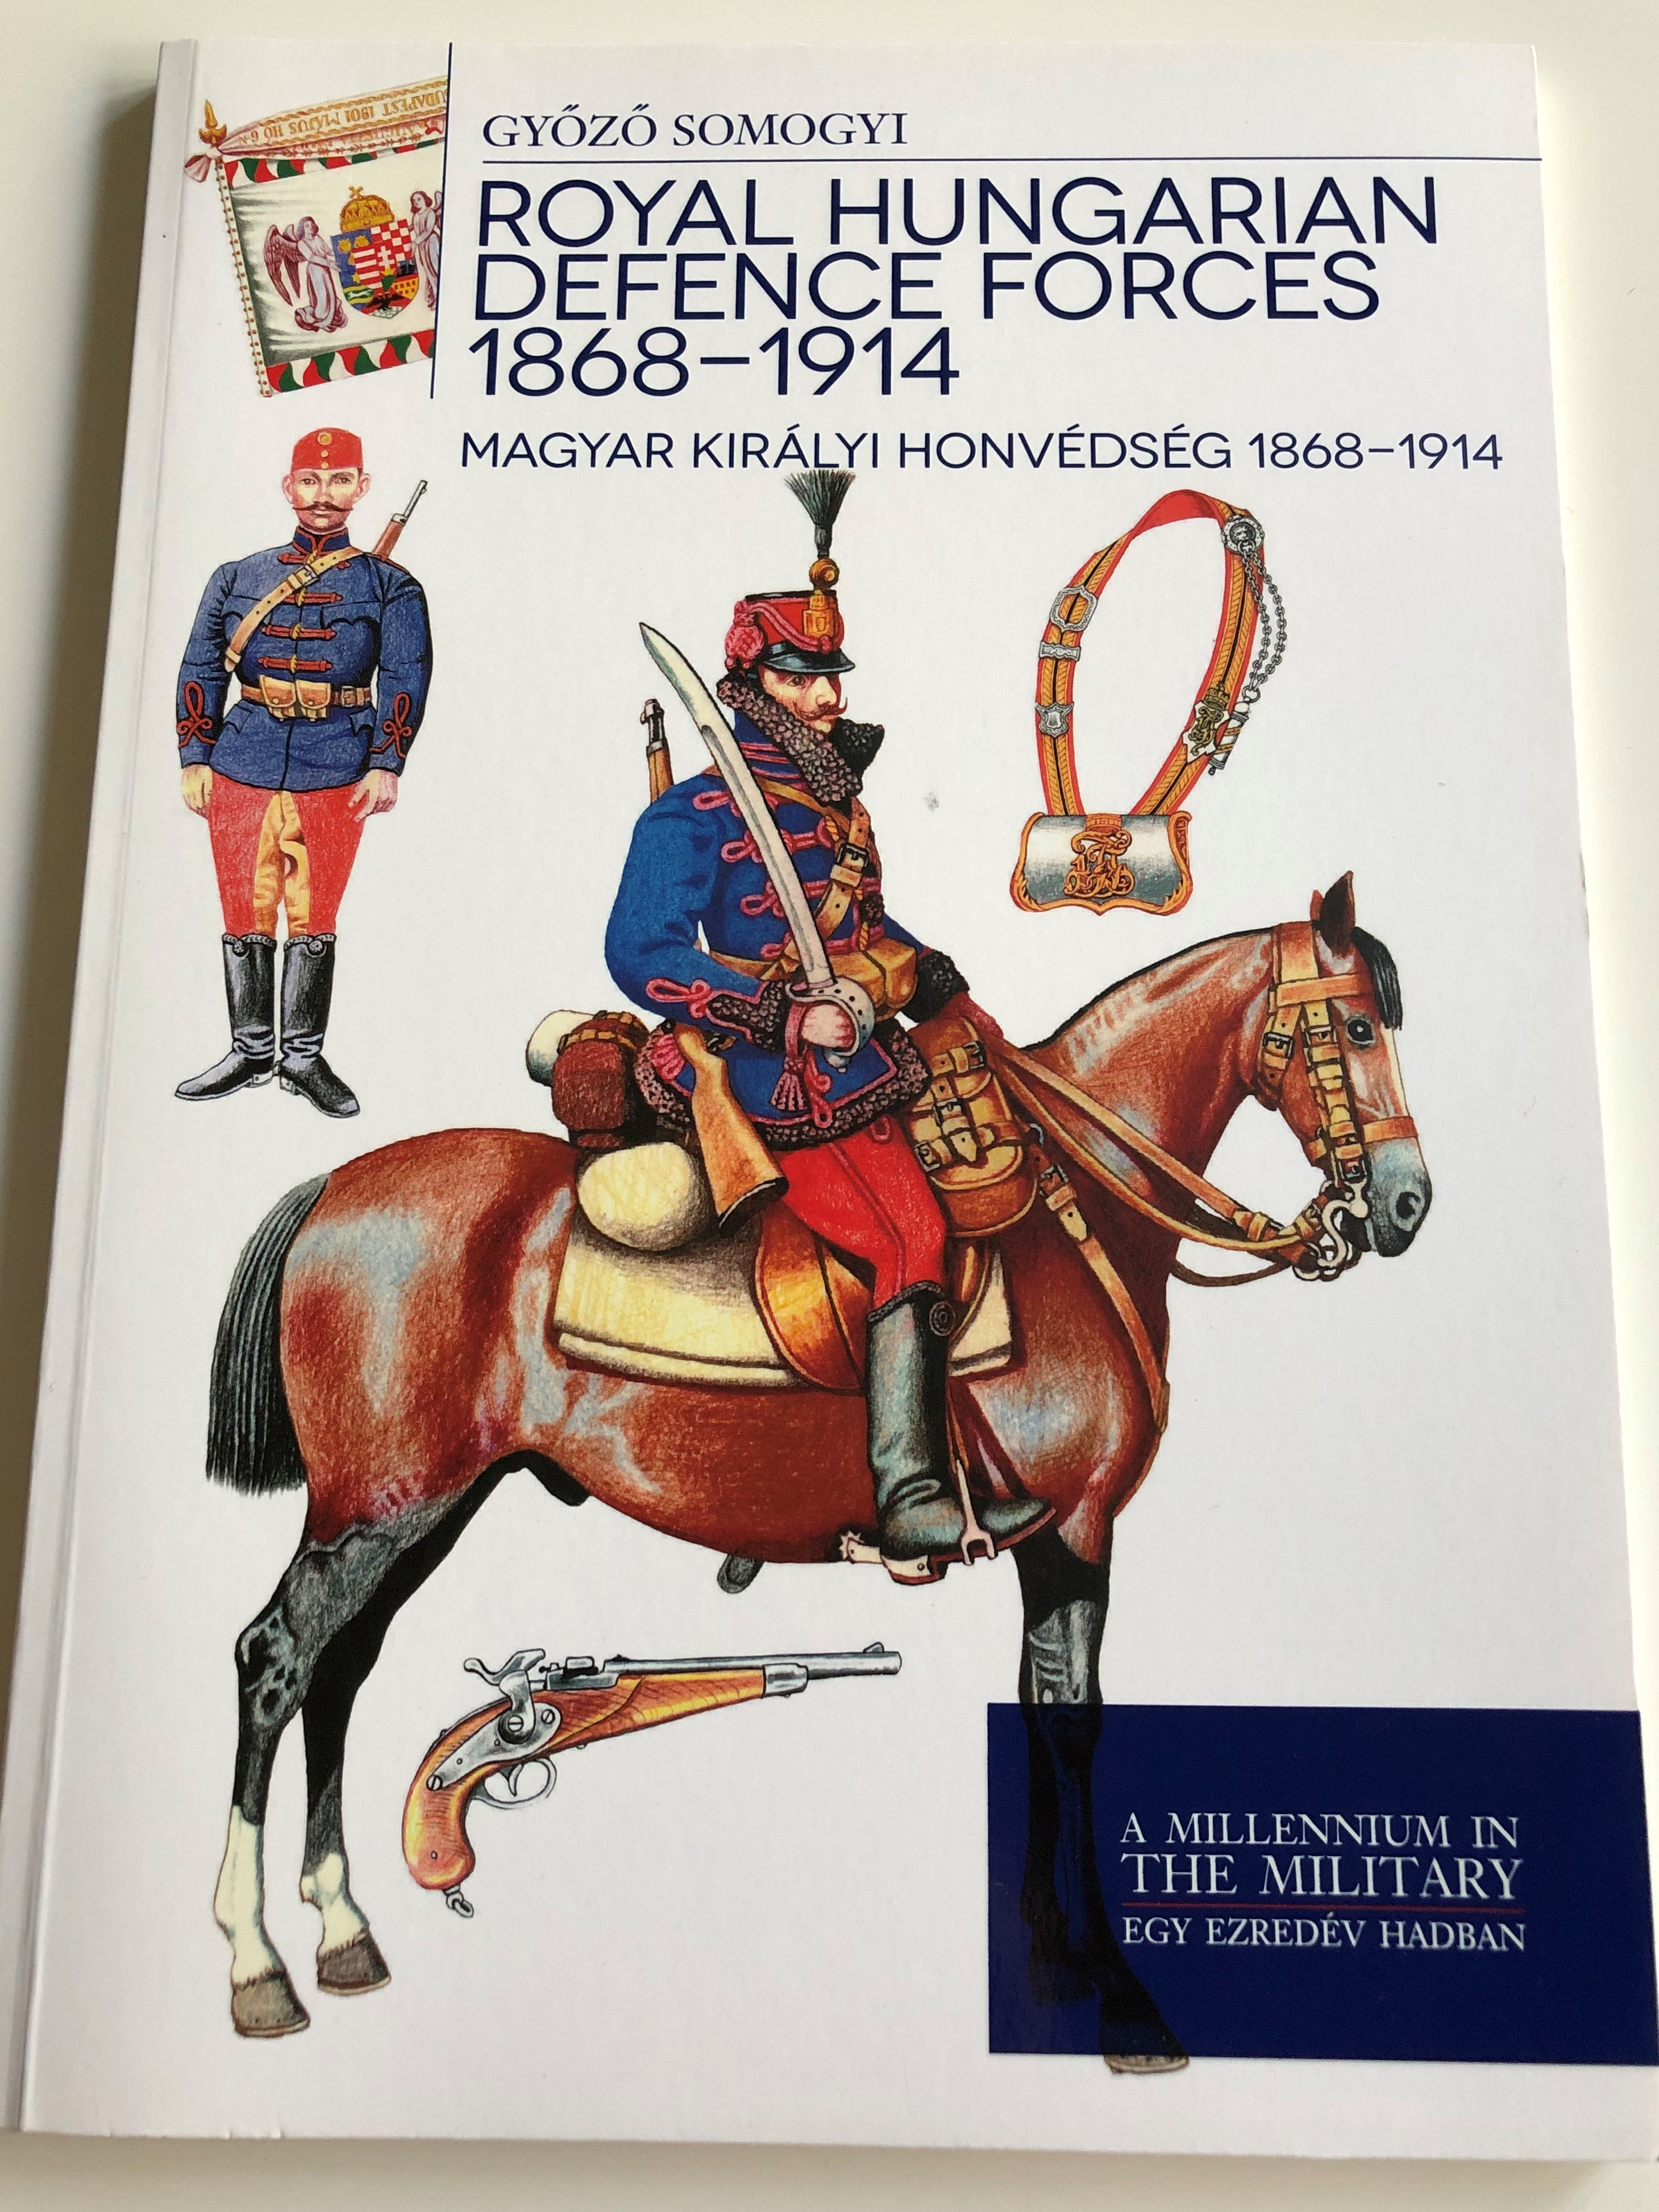 royal-hungarian-defence-forces-1868-1914-by-gy-z-somogyi-magyar-kir-lyi-honv-ds-g-1868-1914-a-millenium-in-the-military-egy-ezred-v-hadban-paperback-2014-hm-zr-nyi-1-.jpg